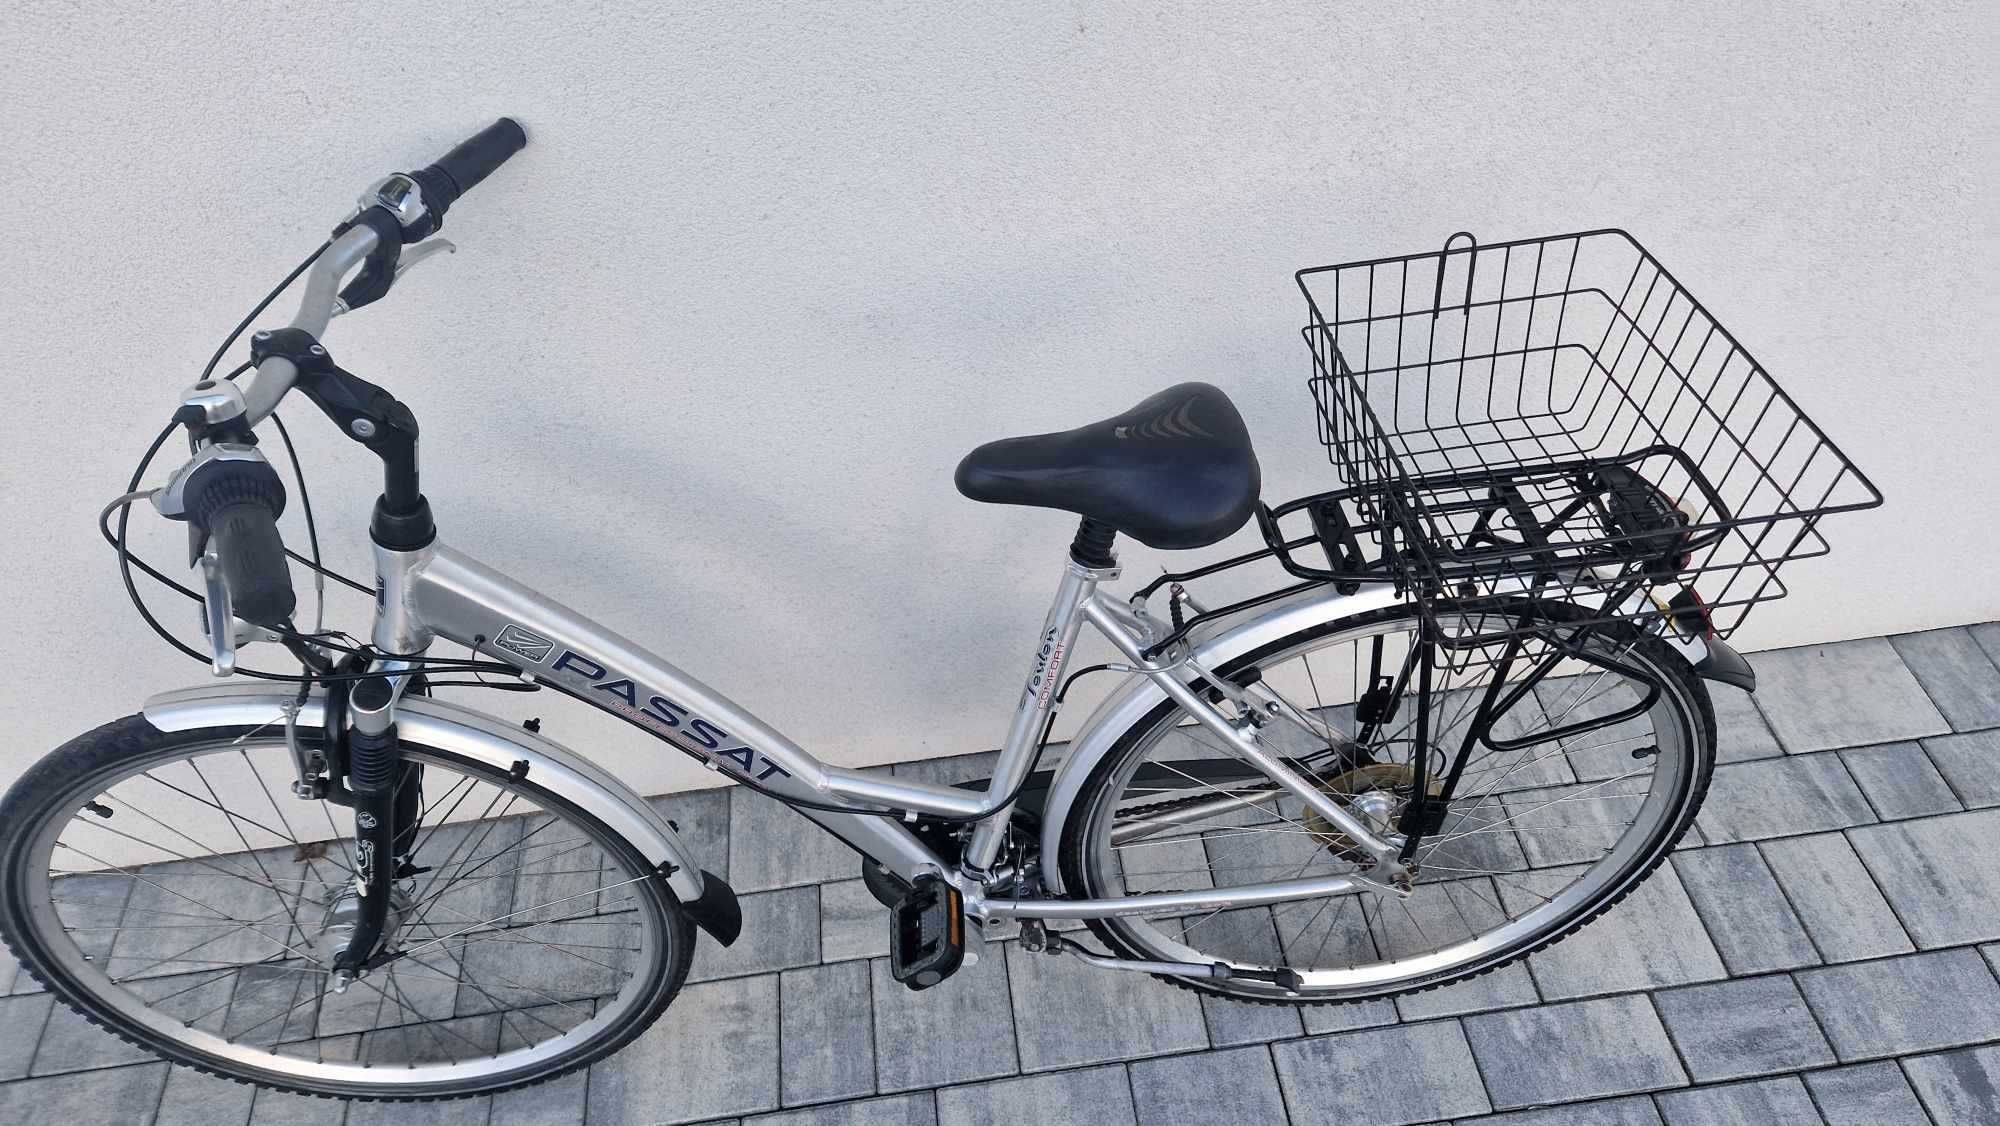 Sprzedam rower aluminiowy  PASSAT TOULON COMFORT, koła 28 cali.